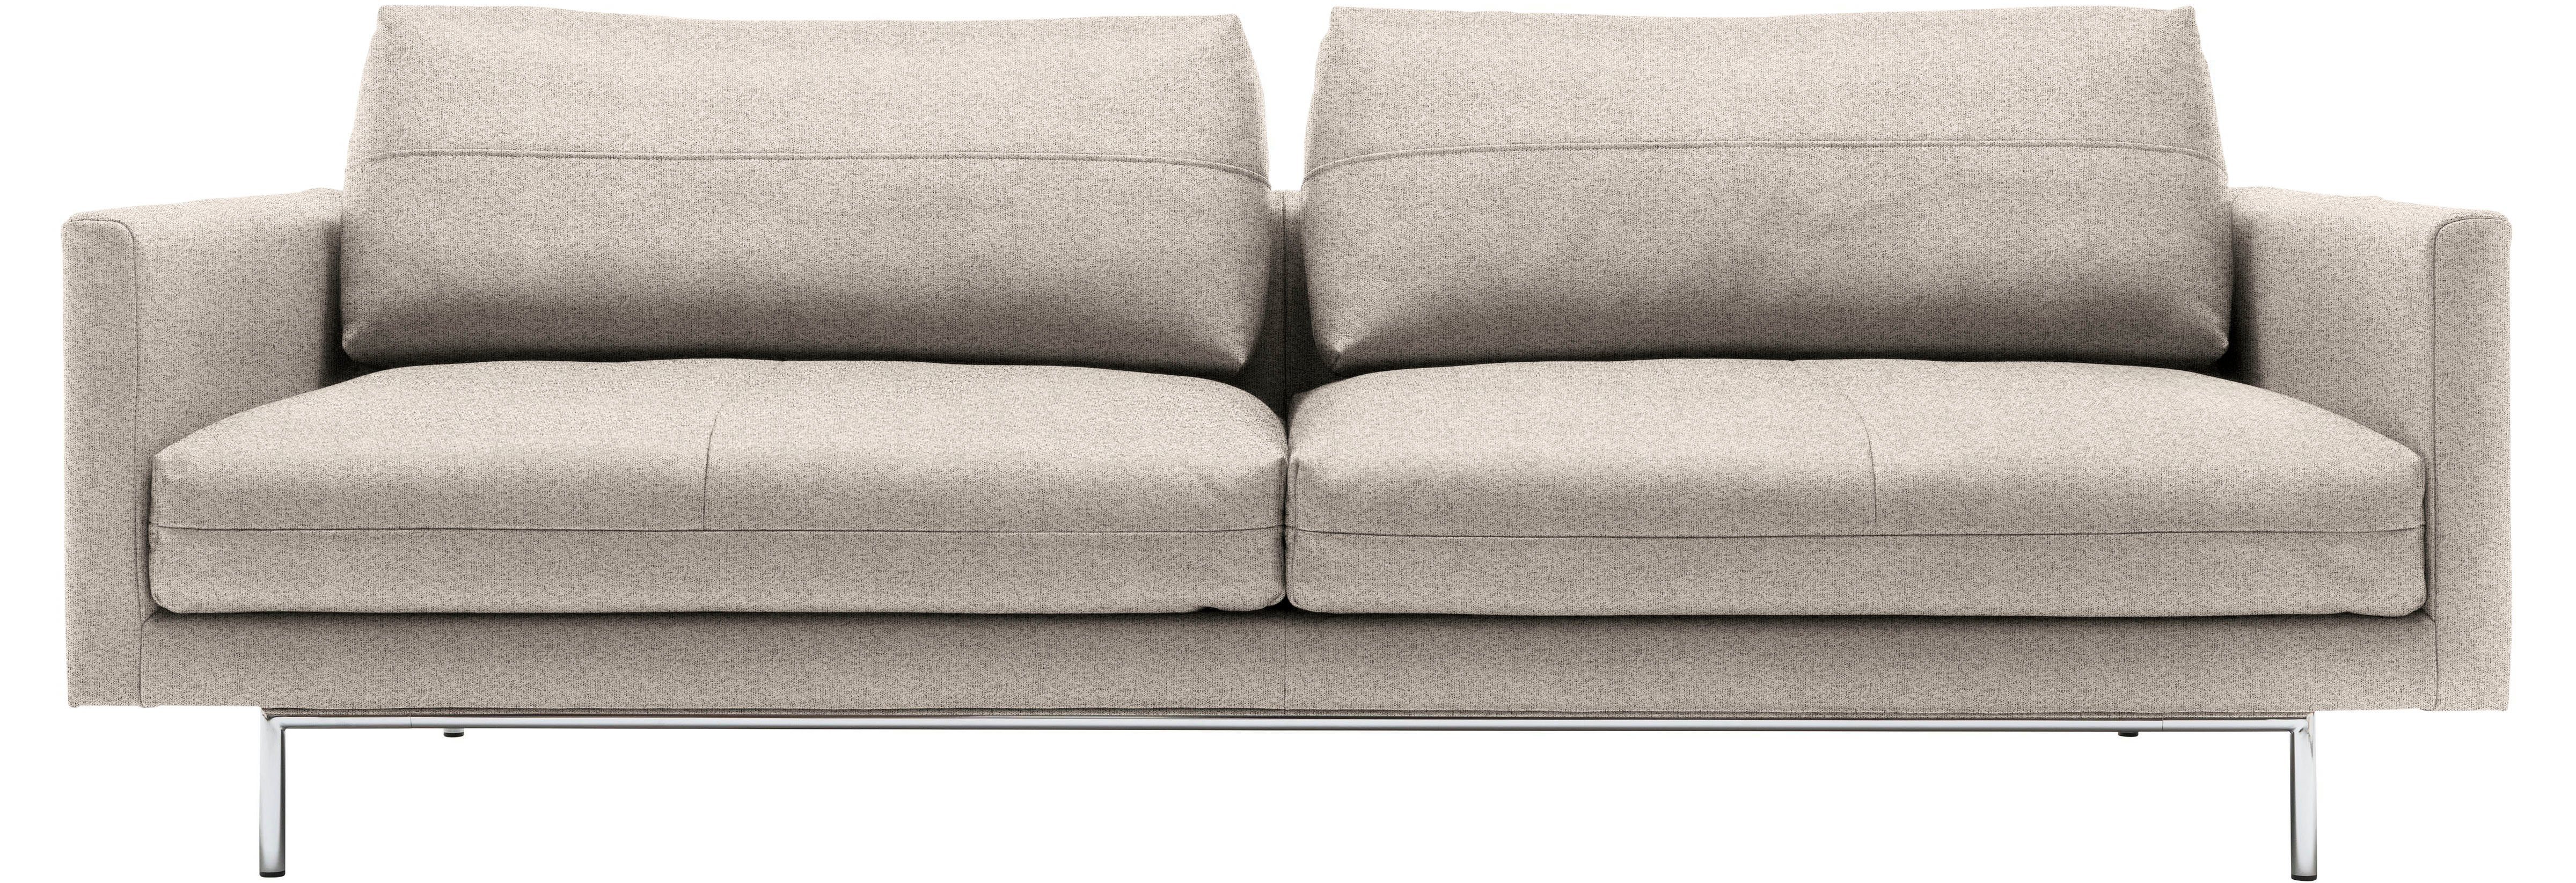 4-Sitzer graubeige sofa grbeige-nat hülsta /natur |